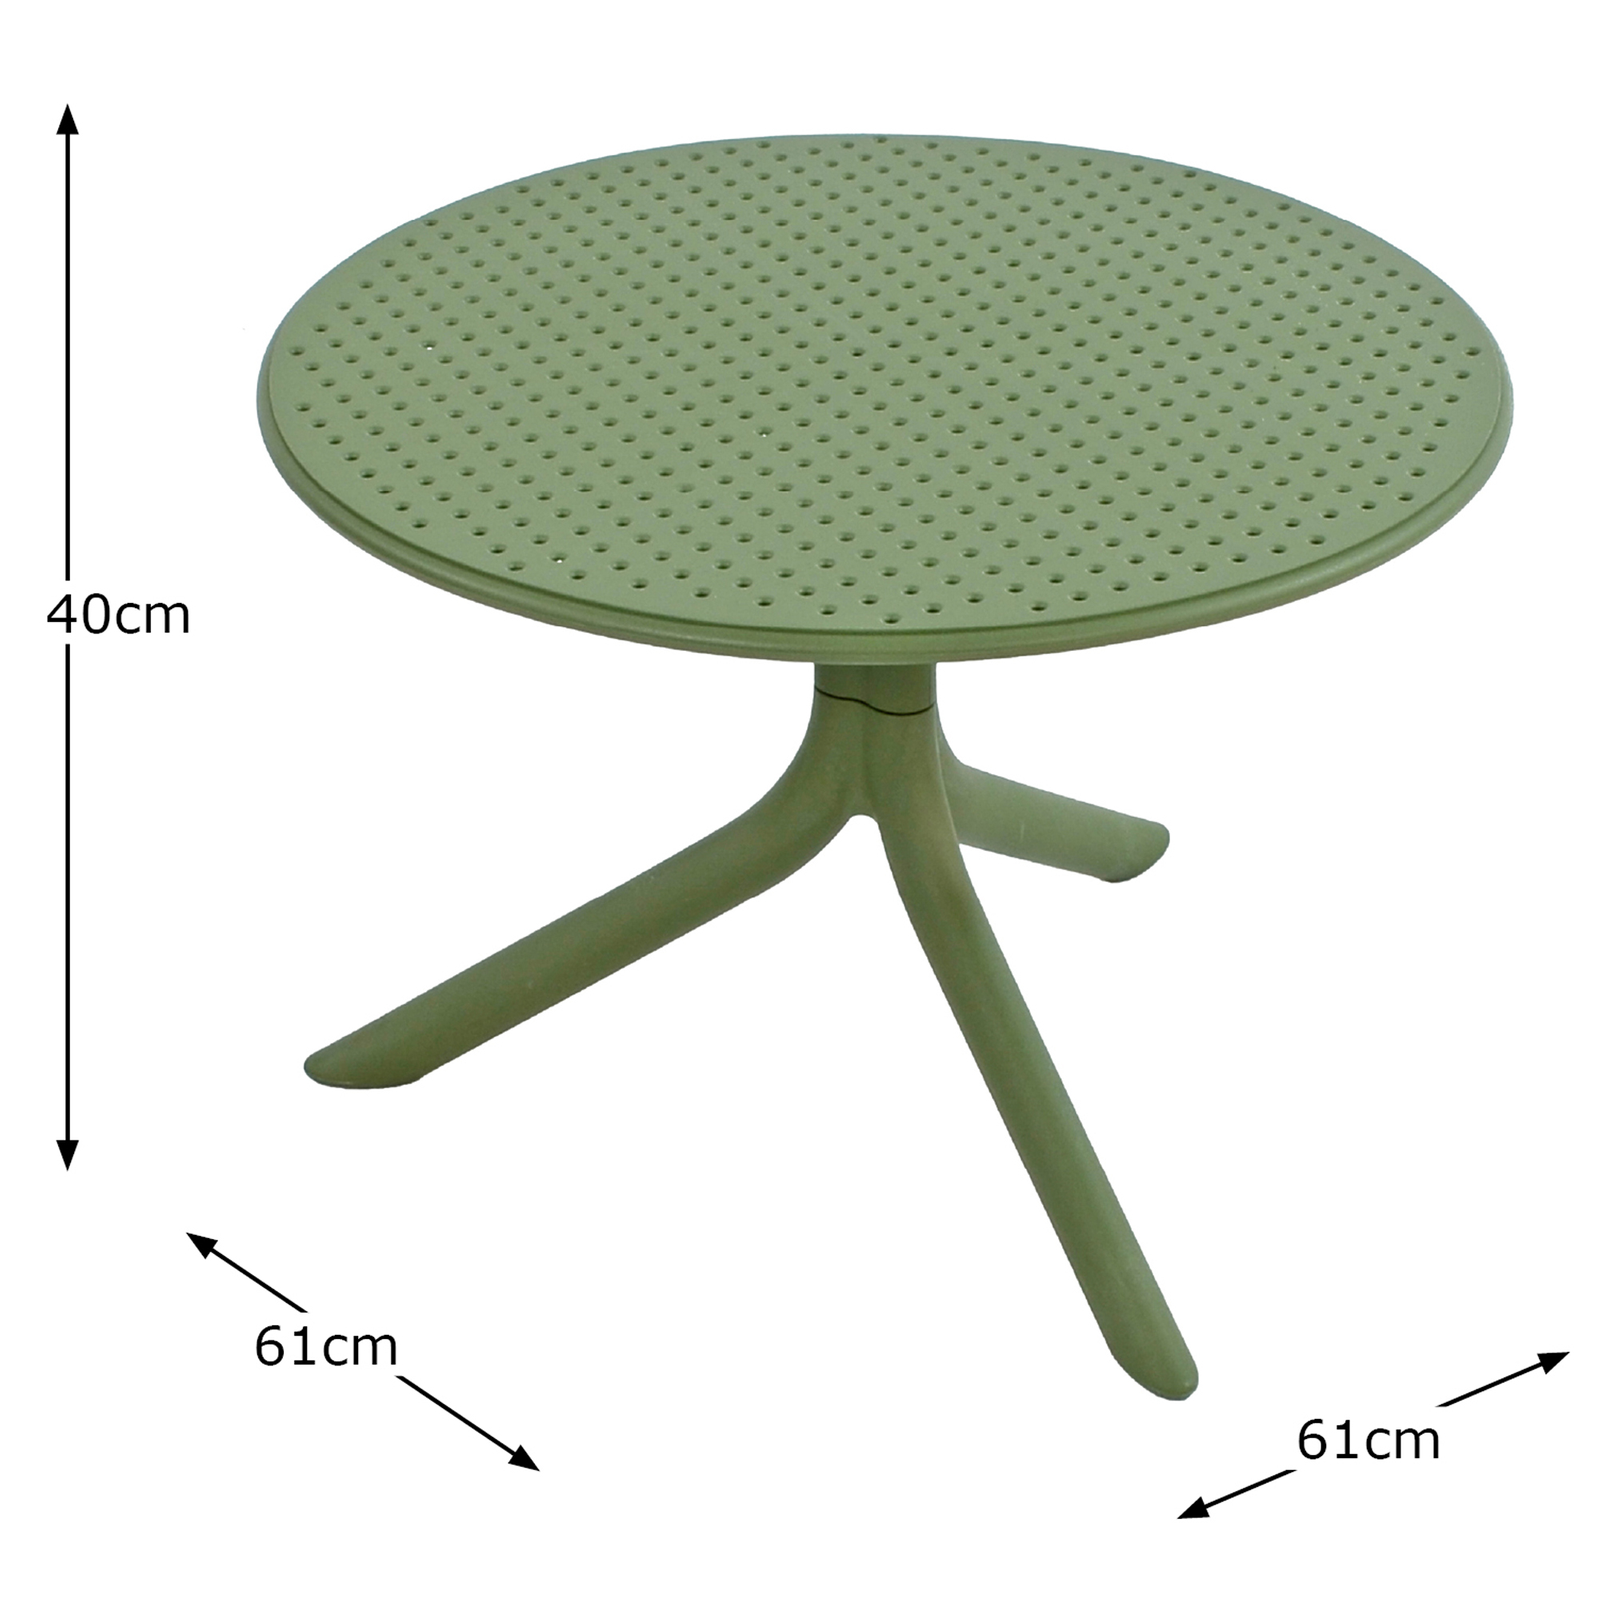 Nardi Step Adjustable Table in Olive Green Tables Nardi   